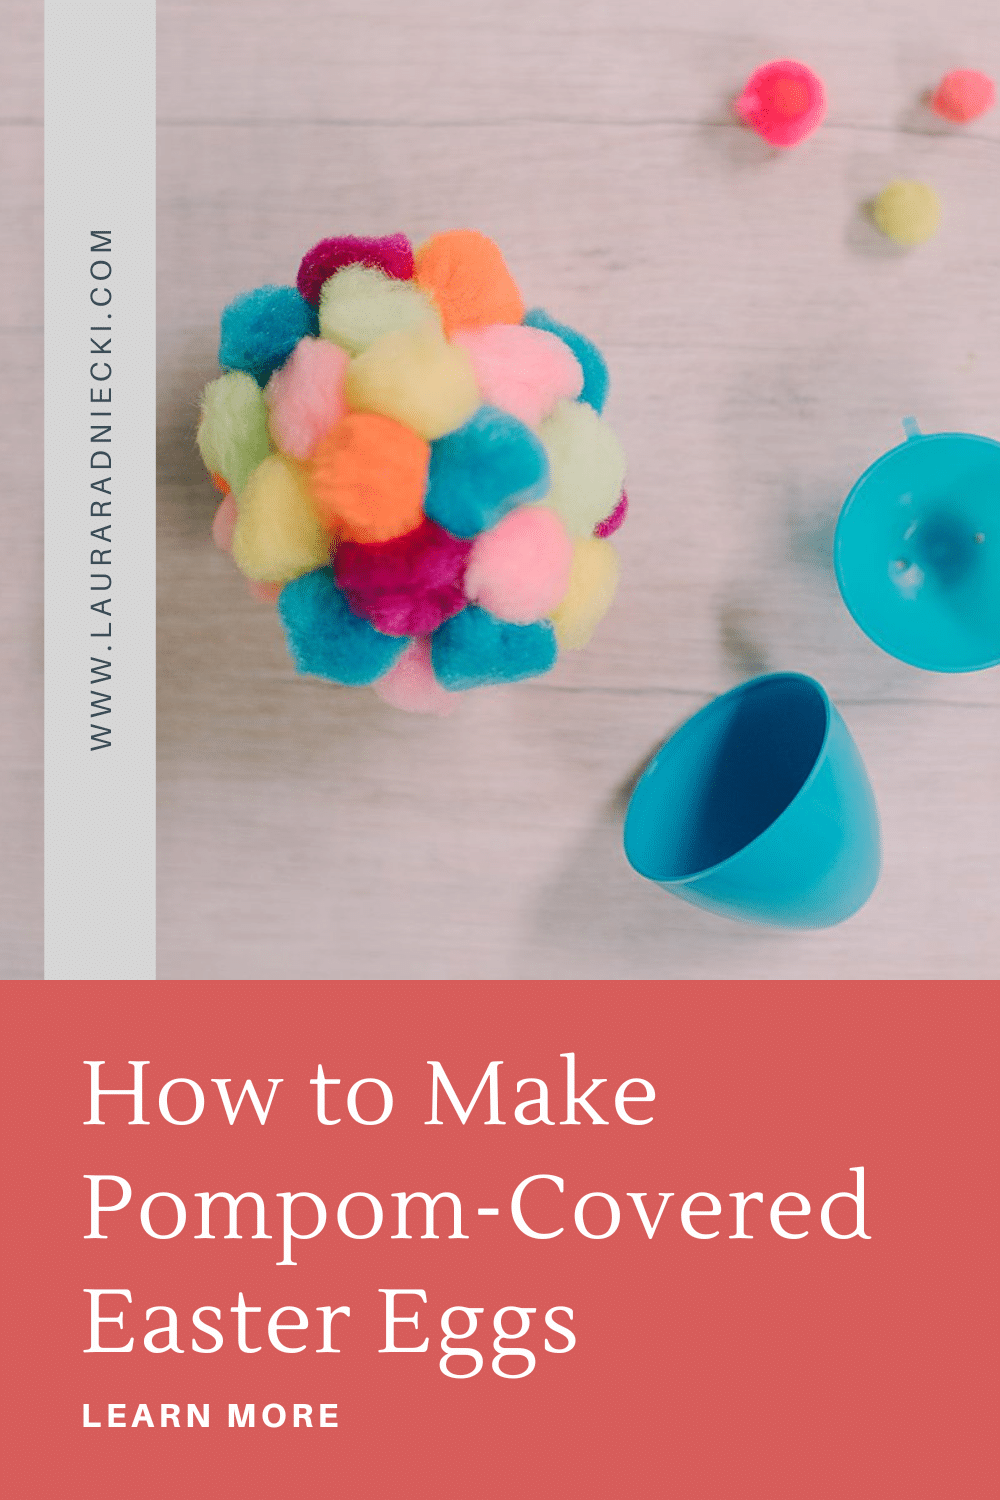 How to Make Pompom-Covered Easter Eggs | Plastic Easter Eggs covered in pompoms using hot glue